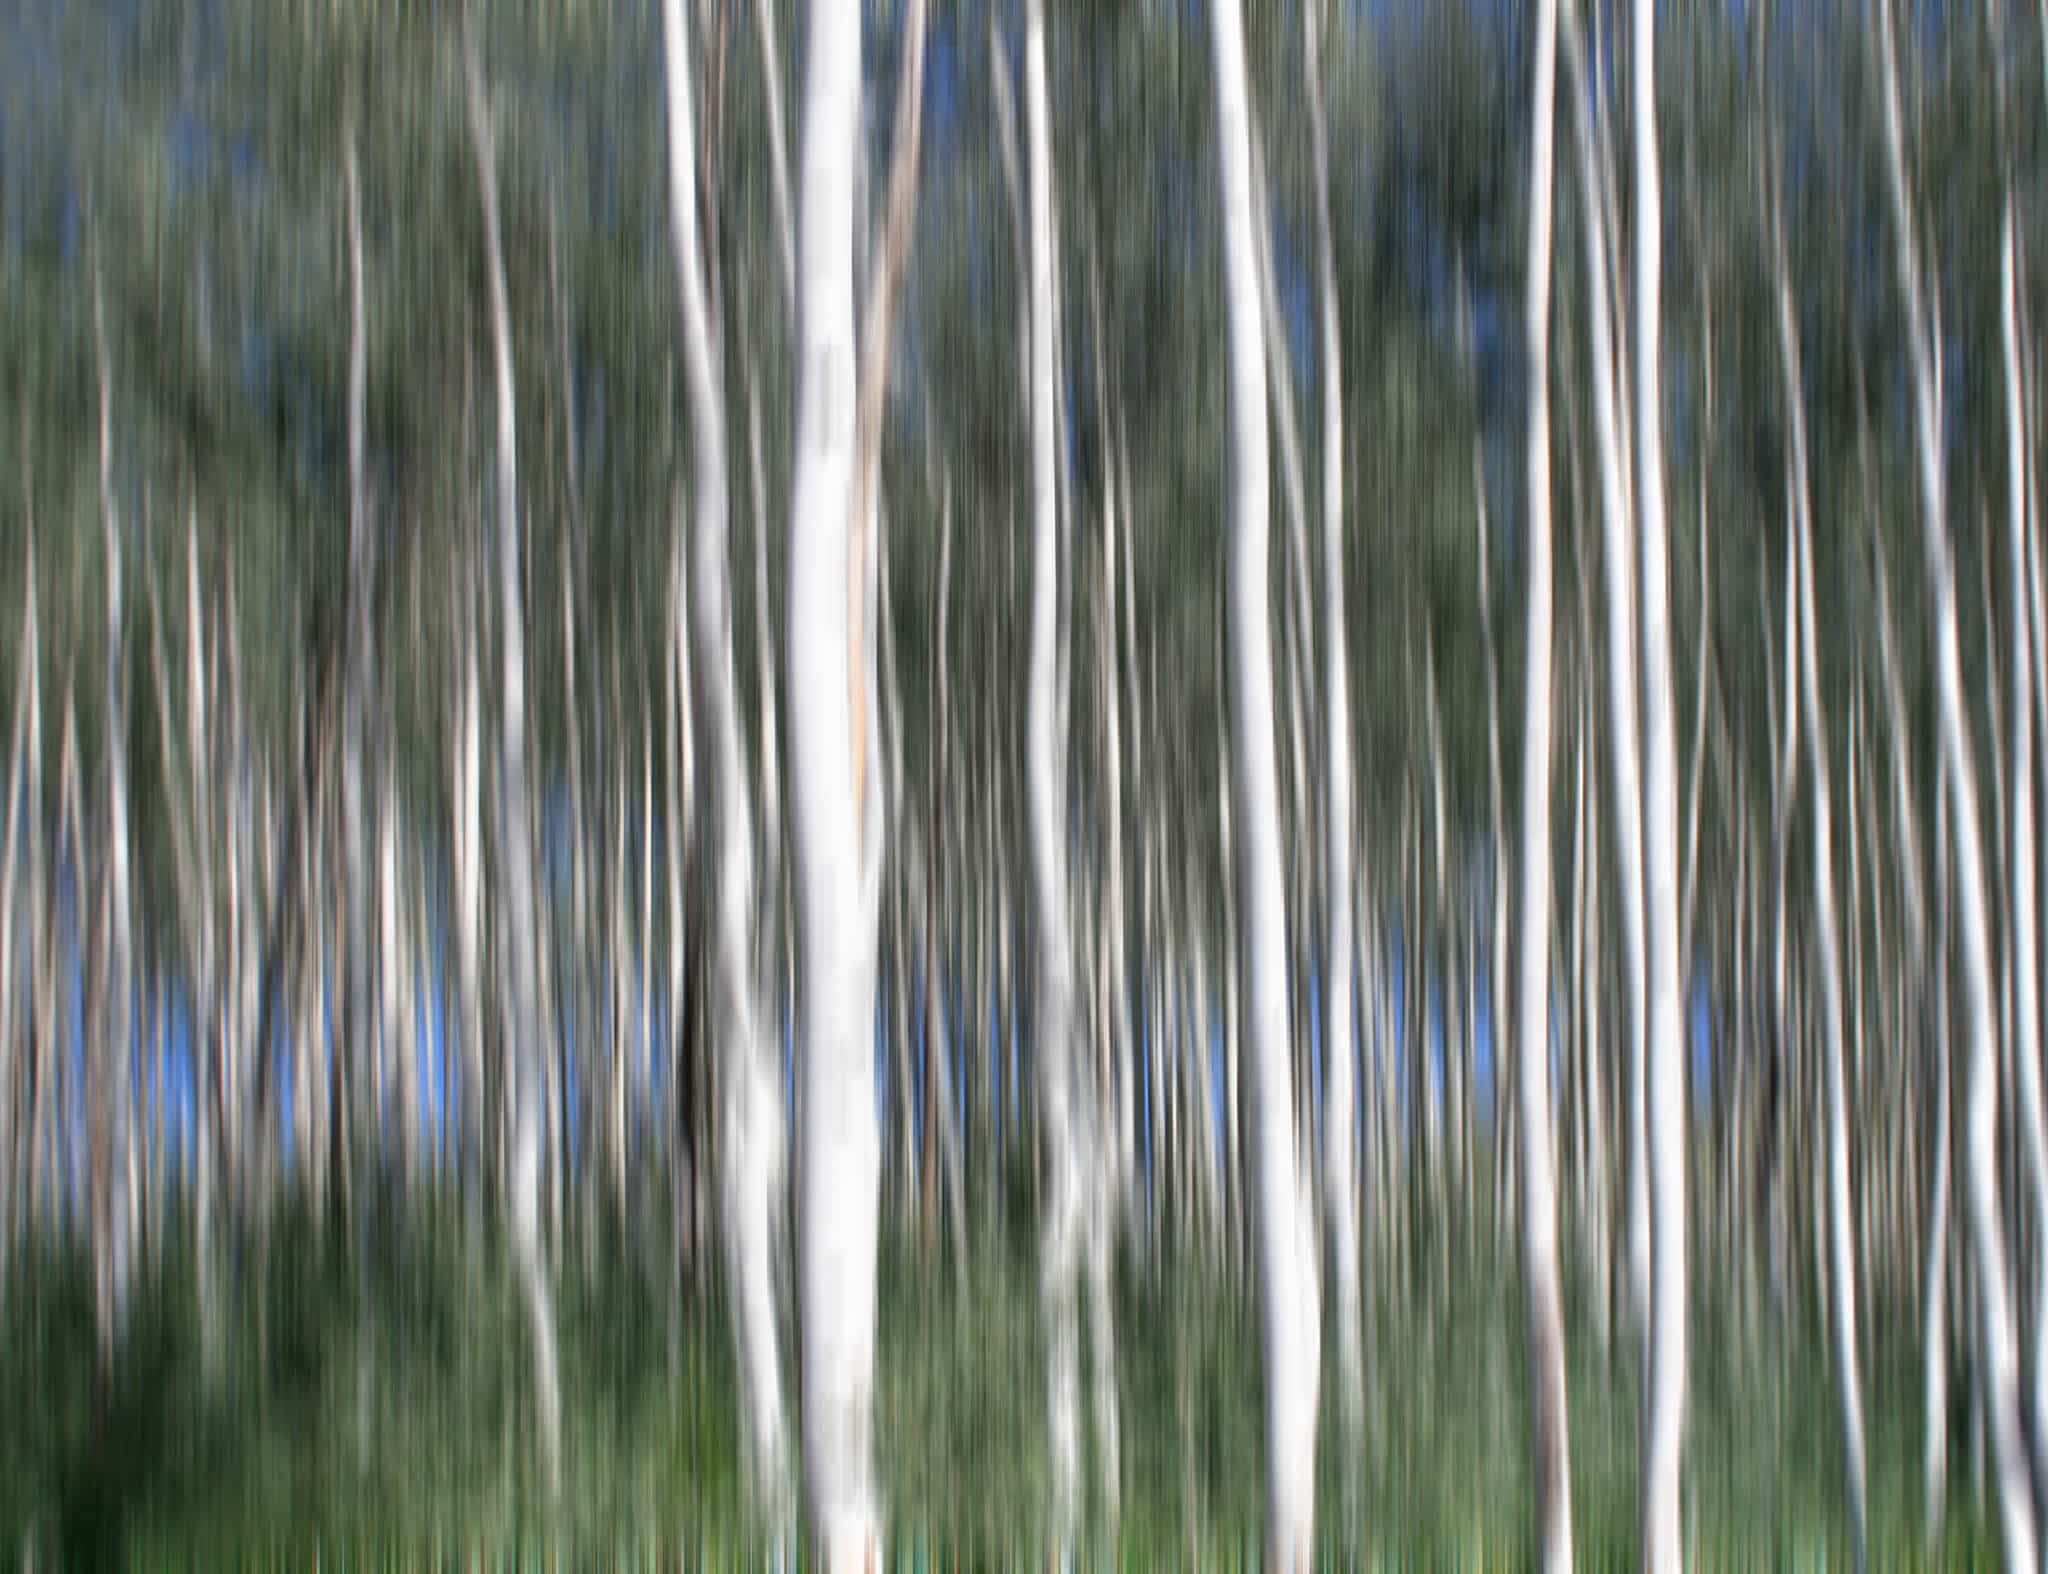 Blurred Trees